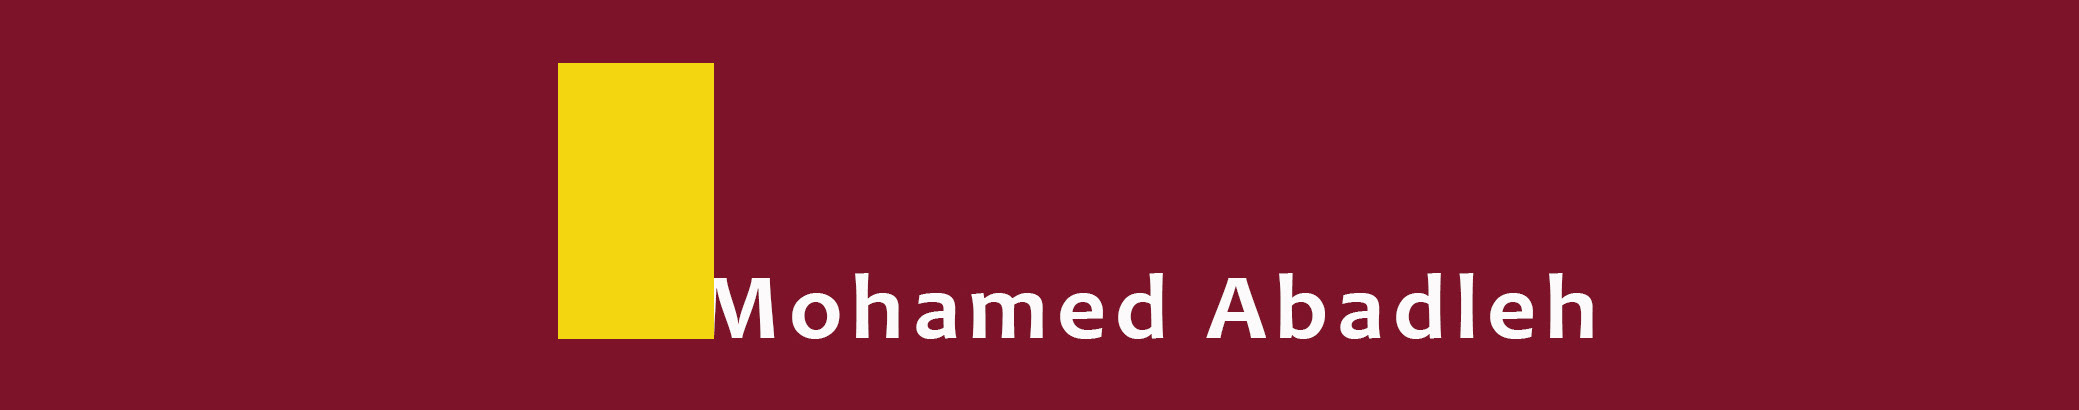 Mohammed Abadla's profile banner